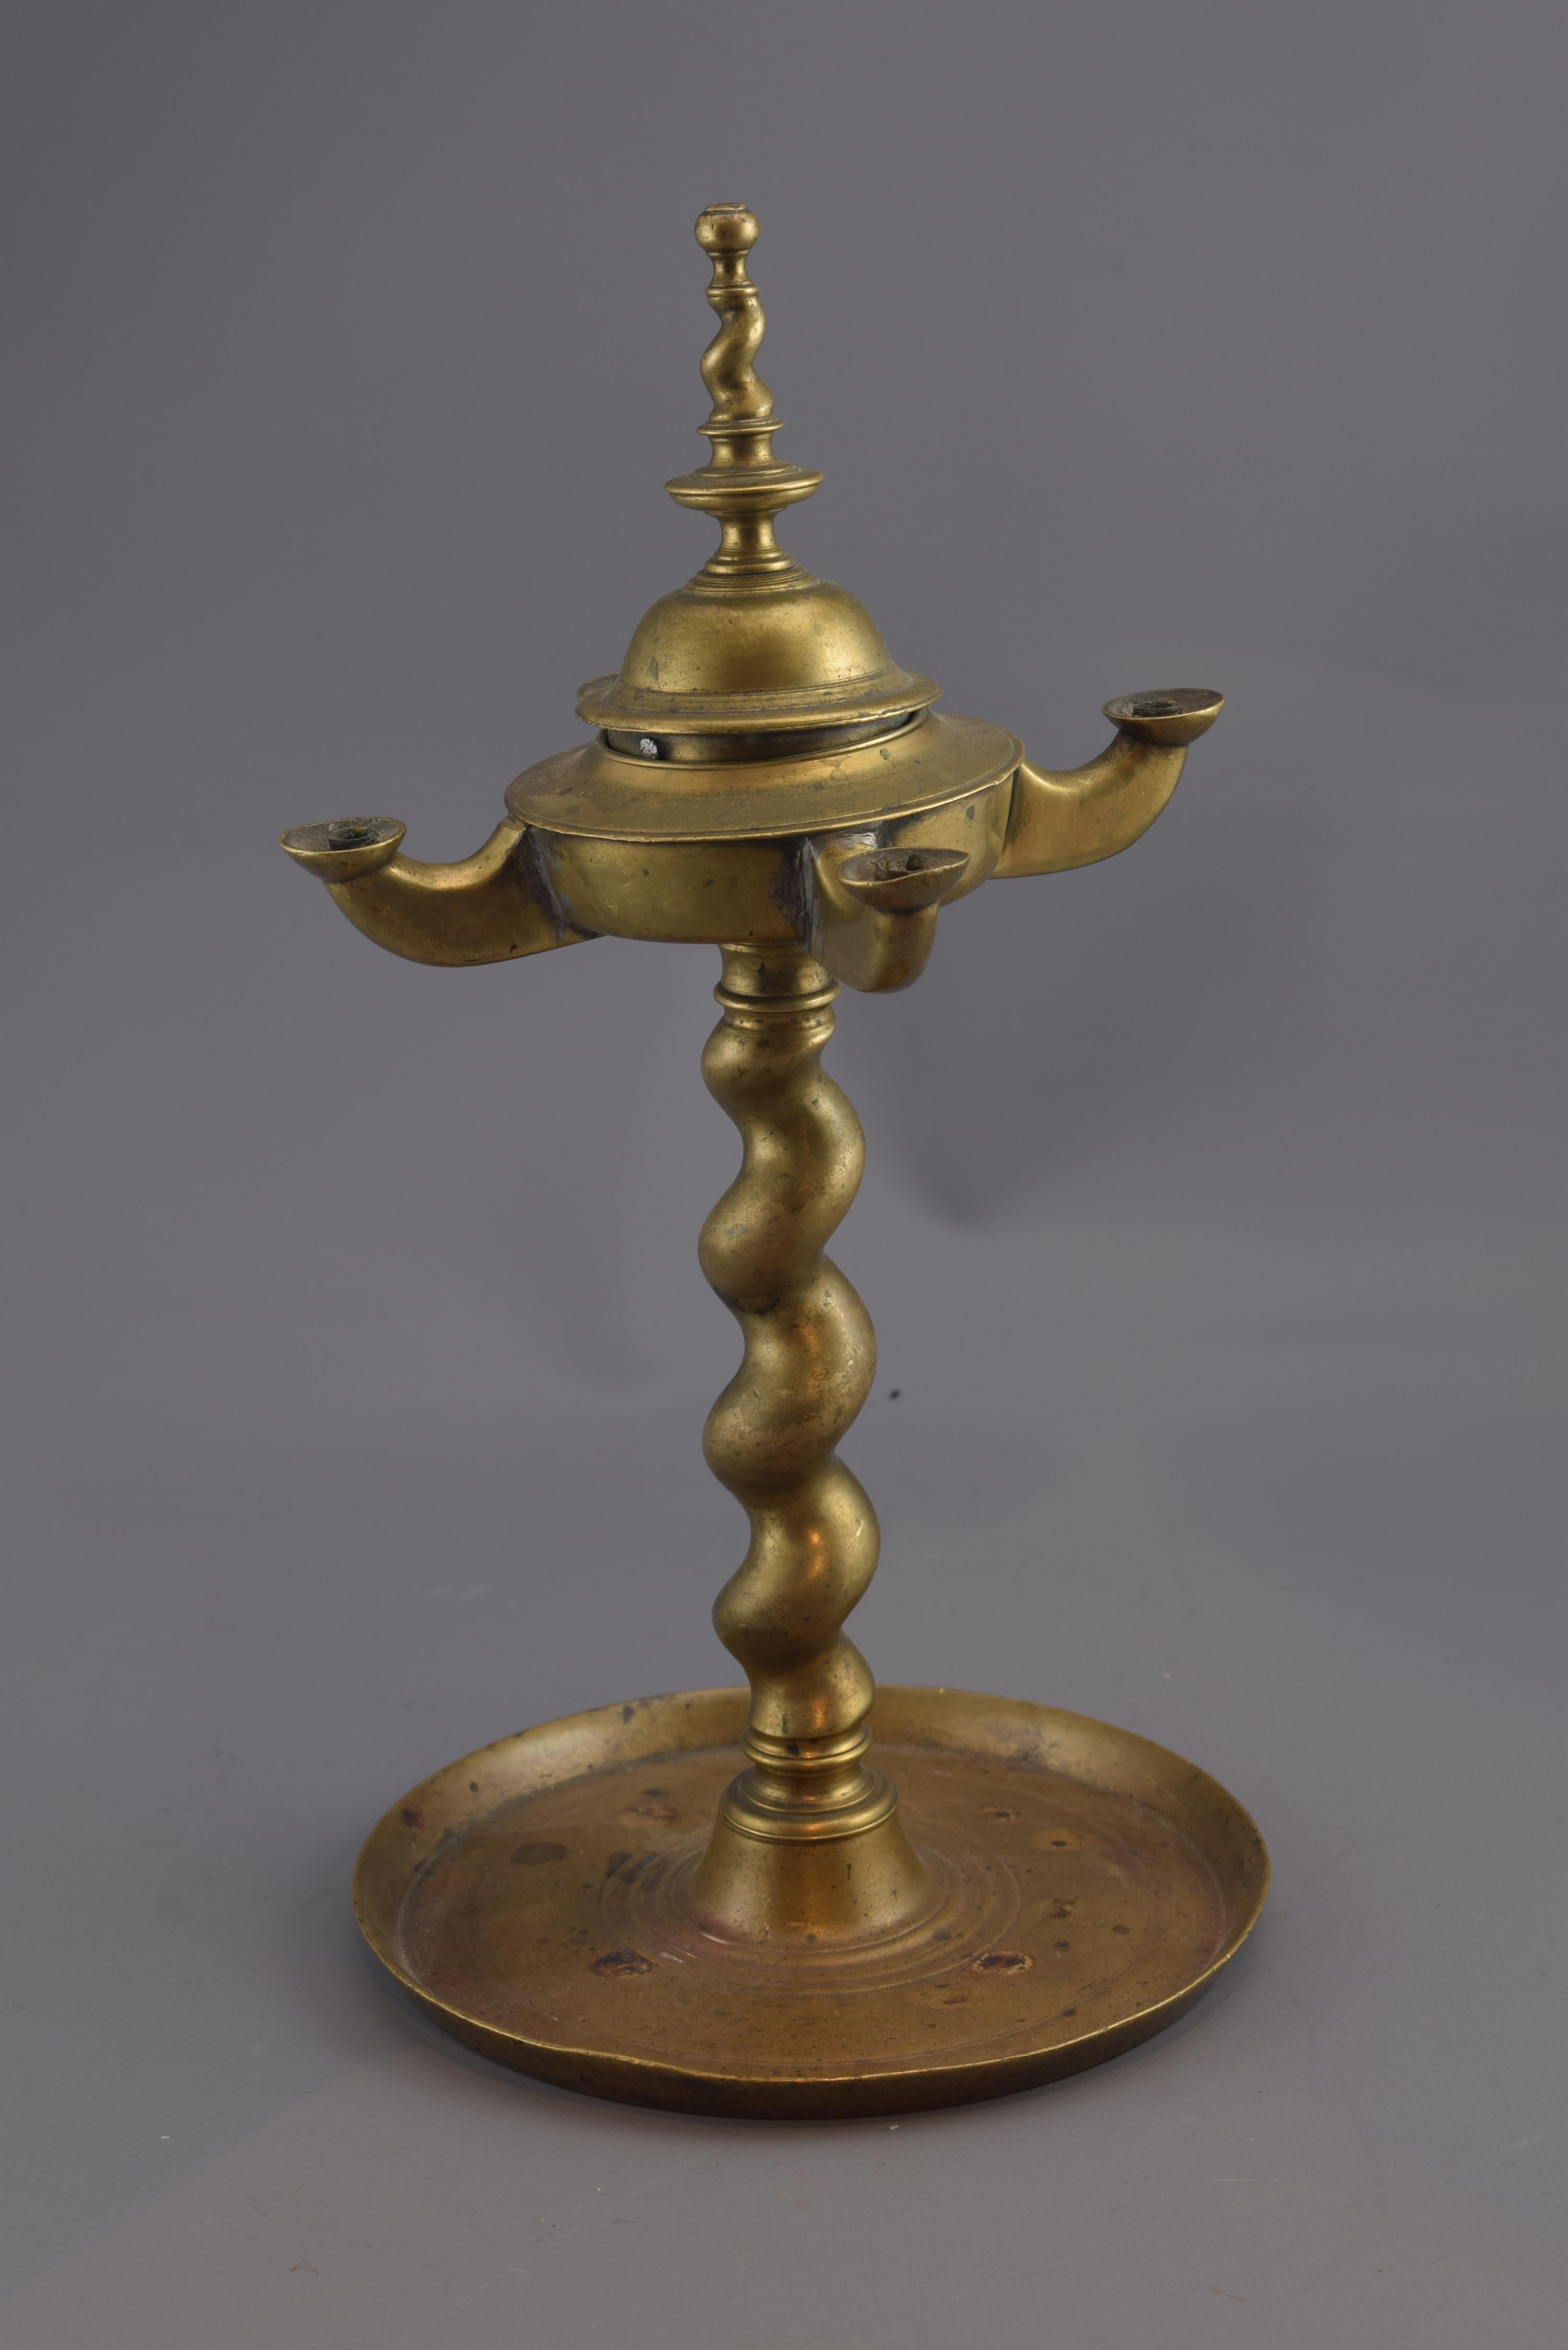 17th century oil lamps